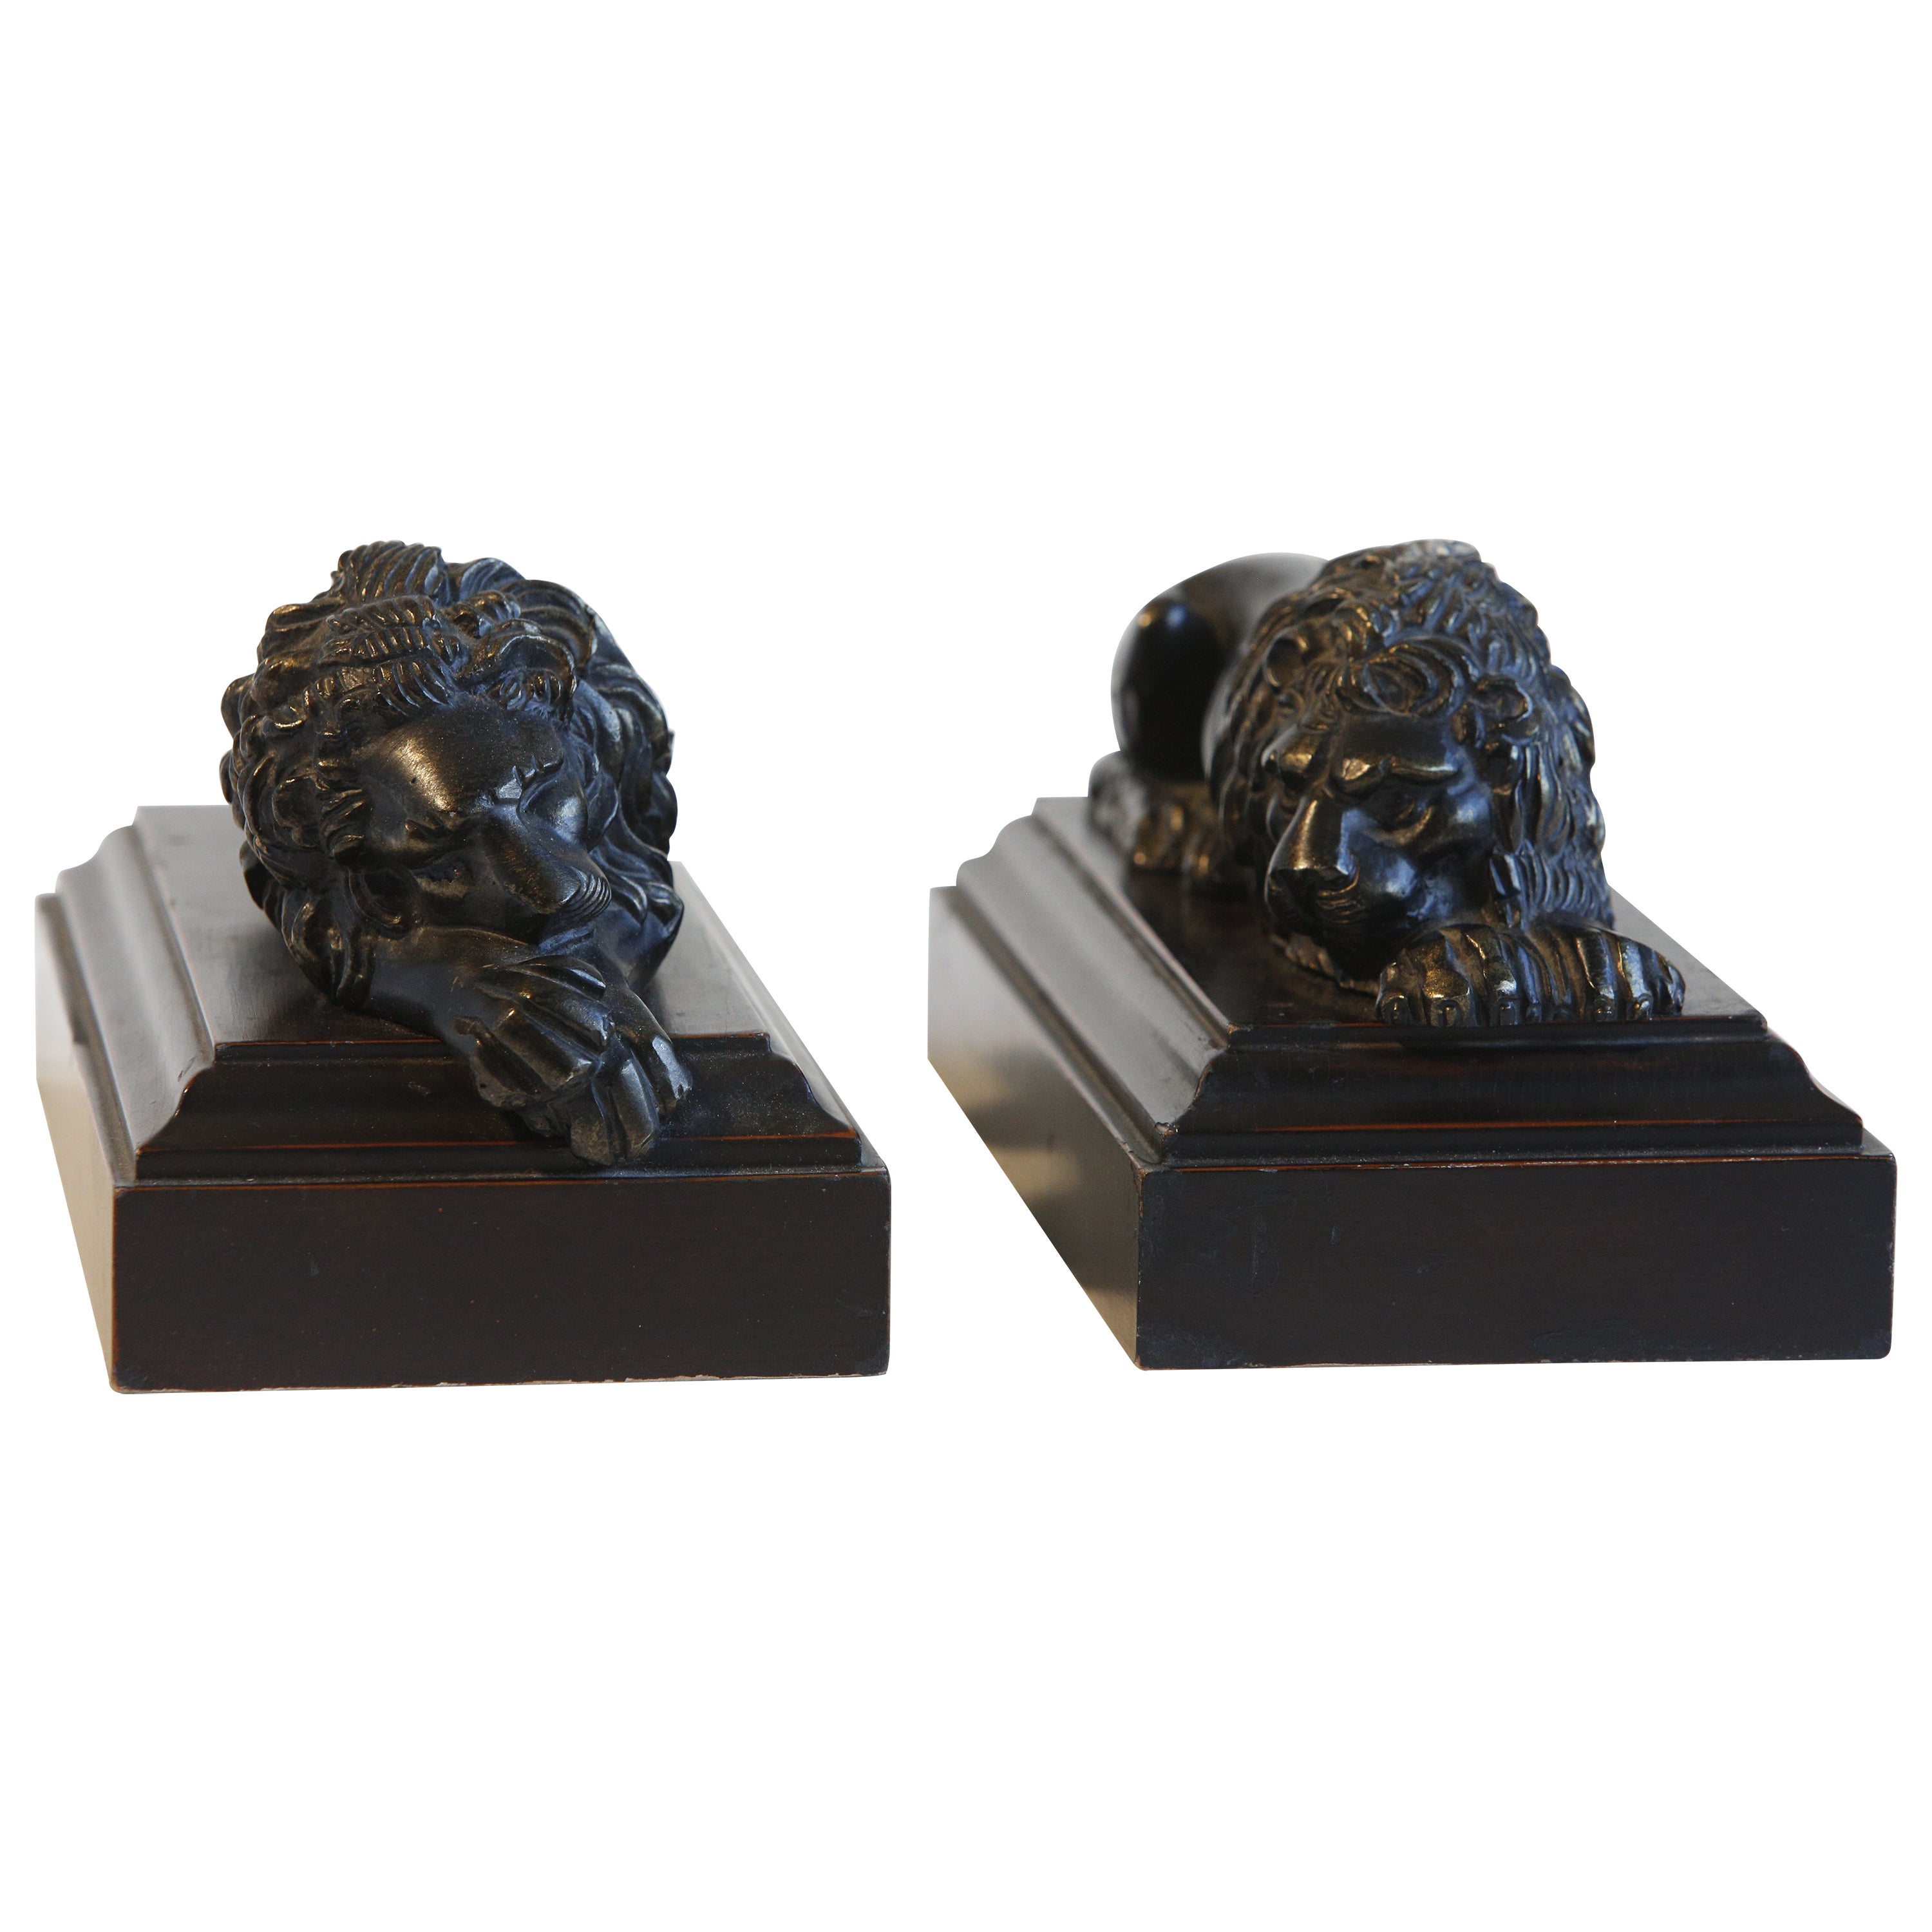 Pair of Cast Sculptures Bronze Lions, after Antonio Canova, 19th Century